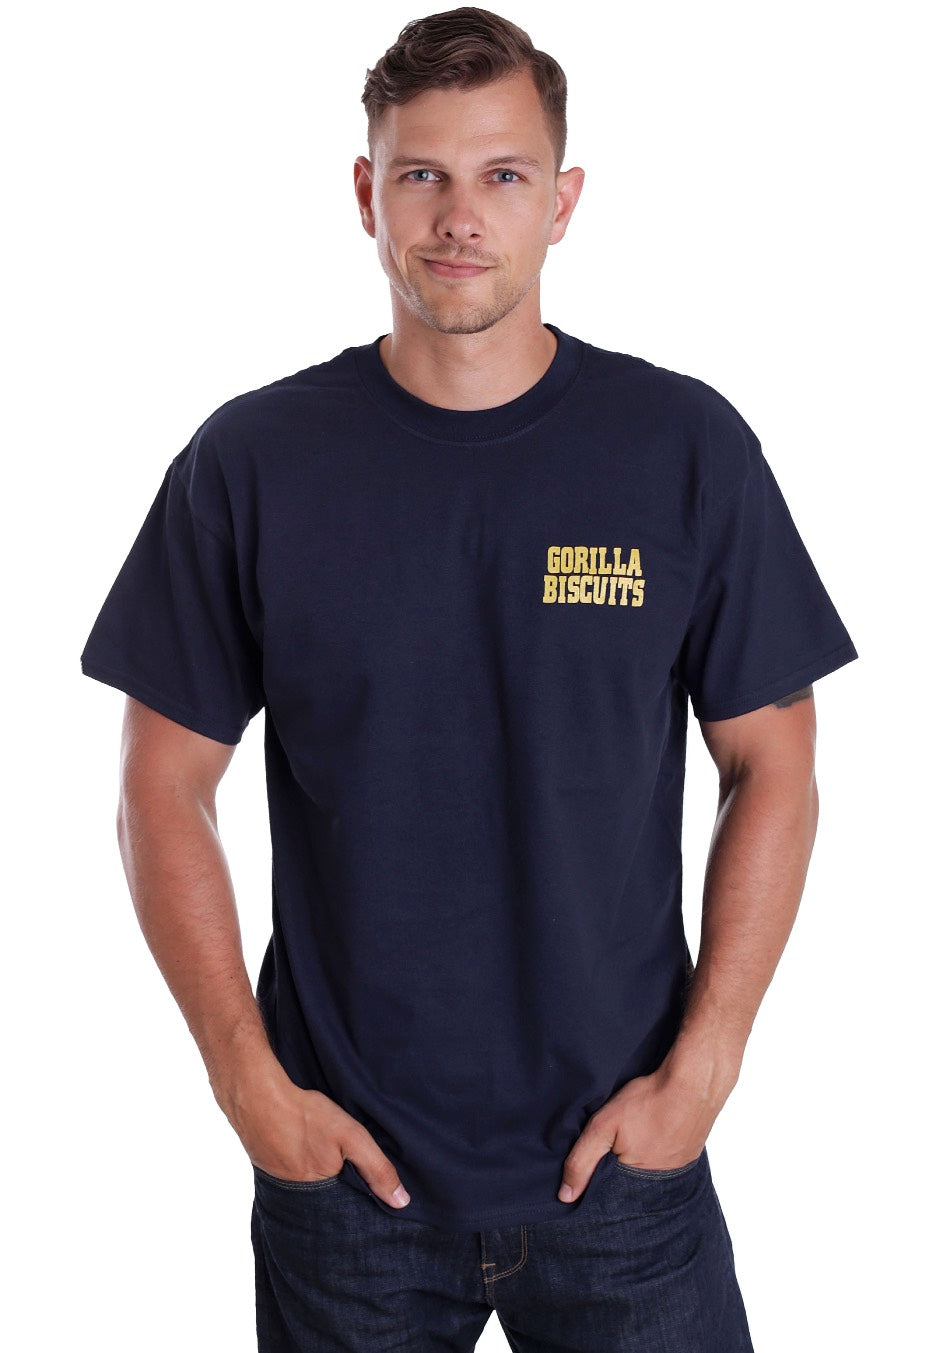 Gorilla Biscuits - Hold Your Ground Pocket Navy - T-Shirt | Men-Image